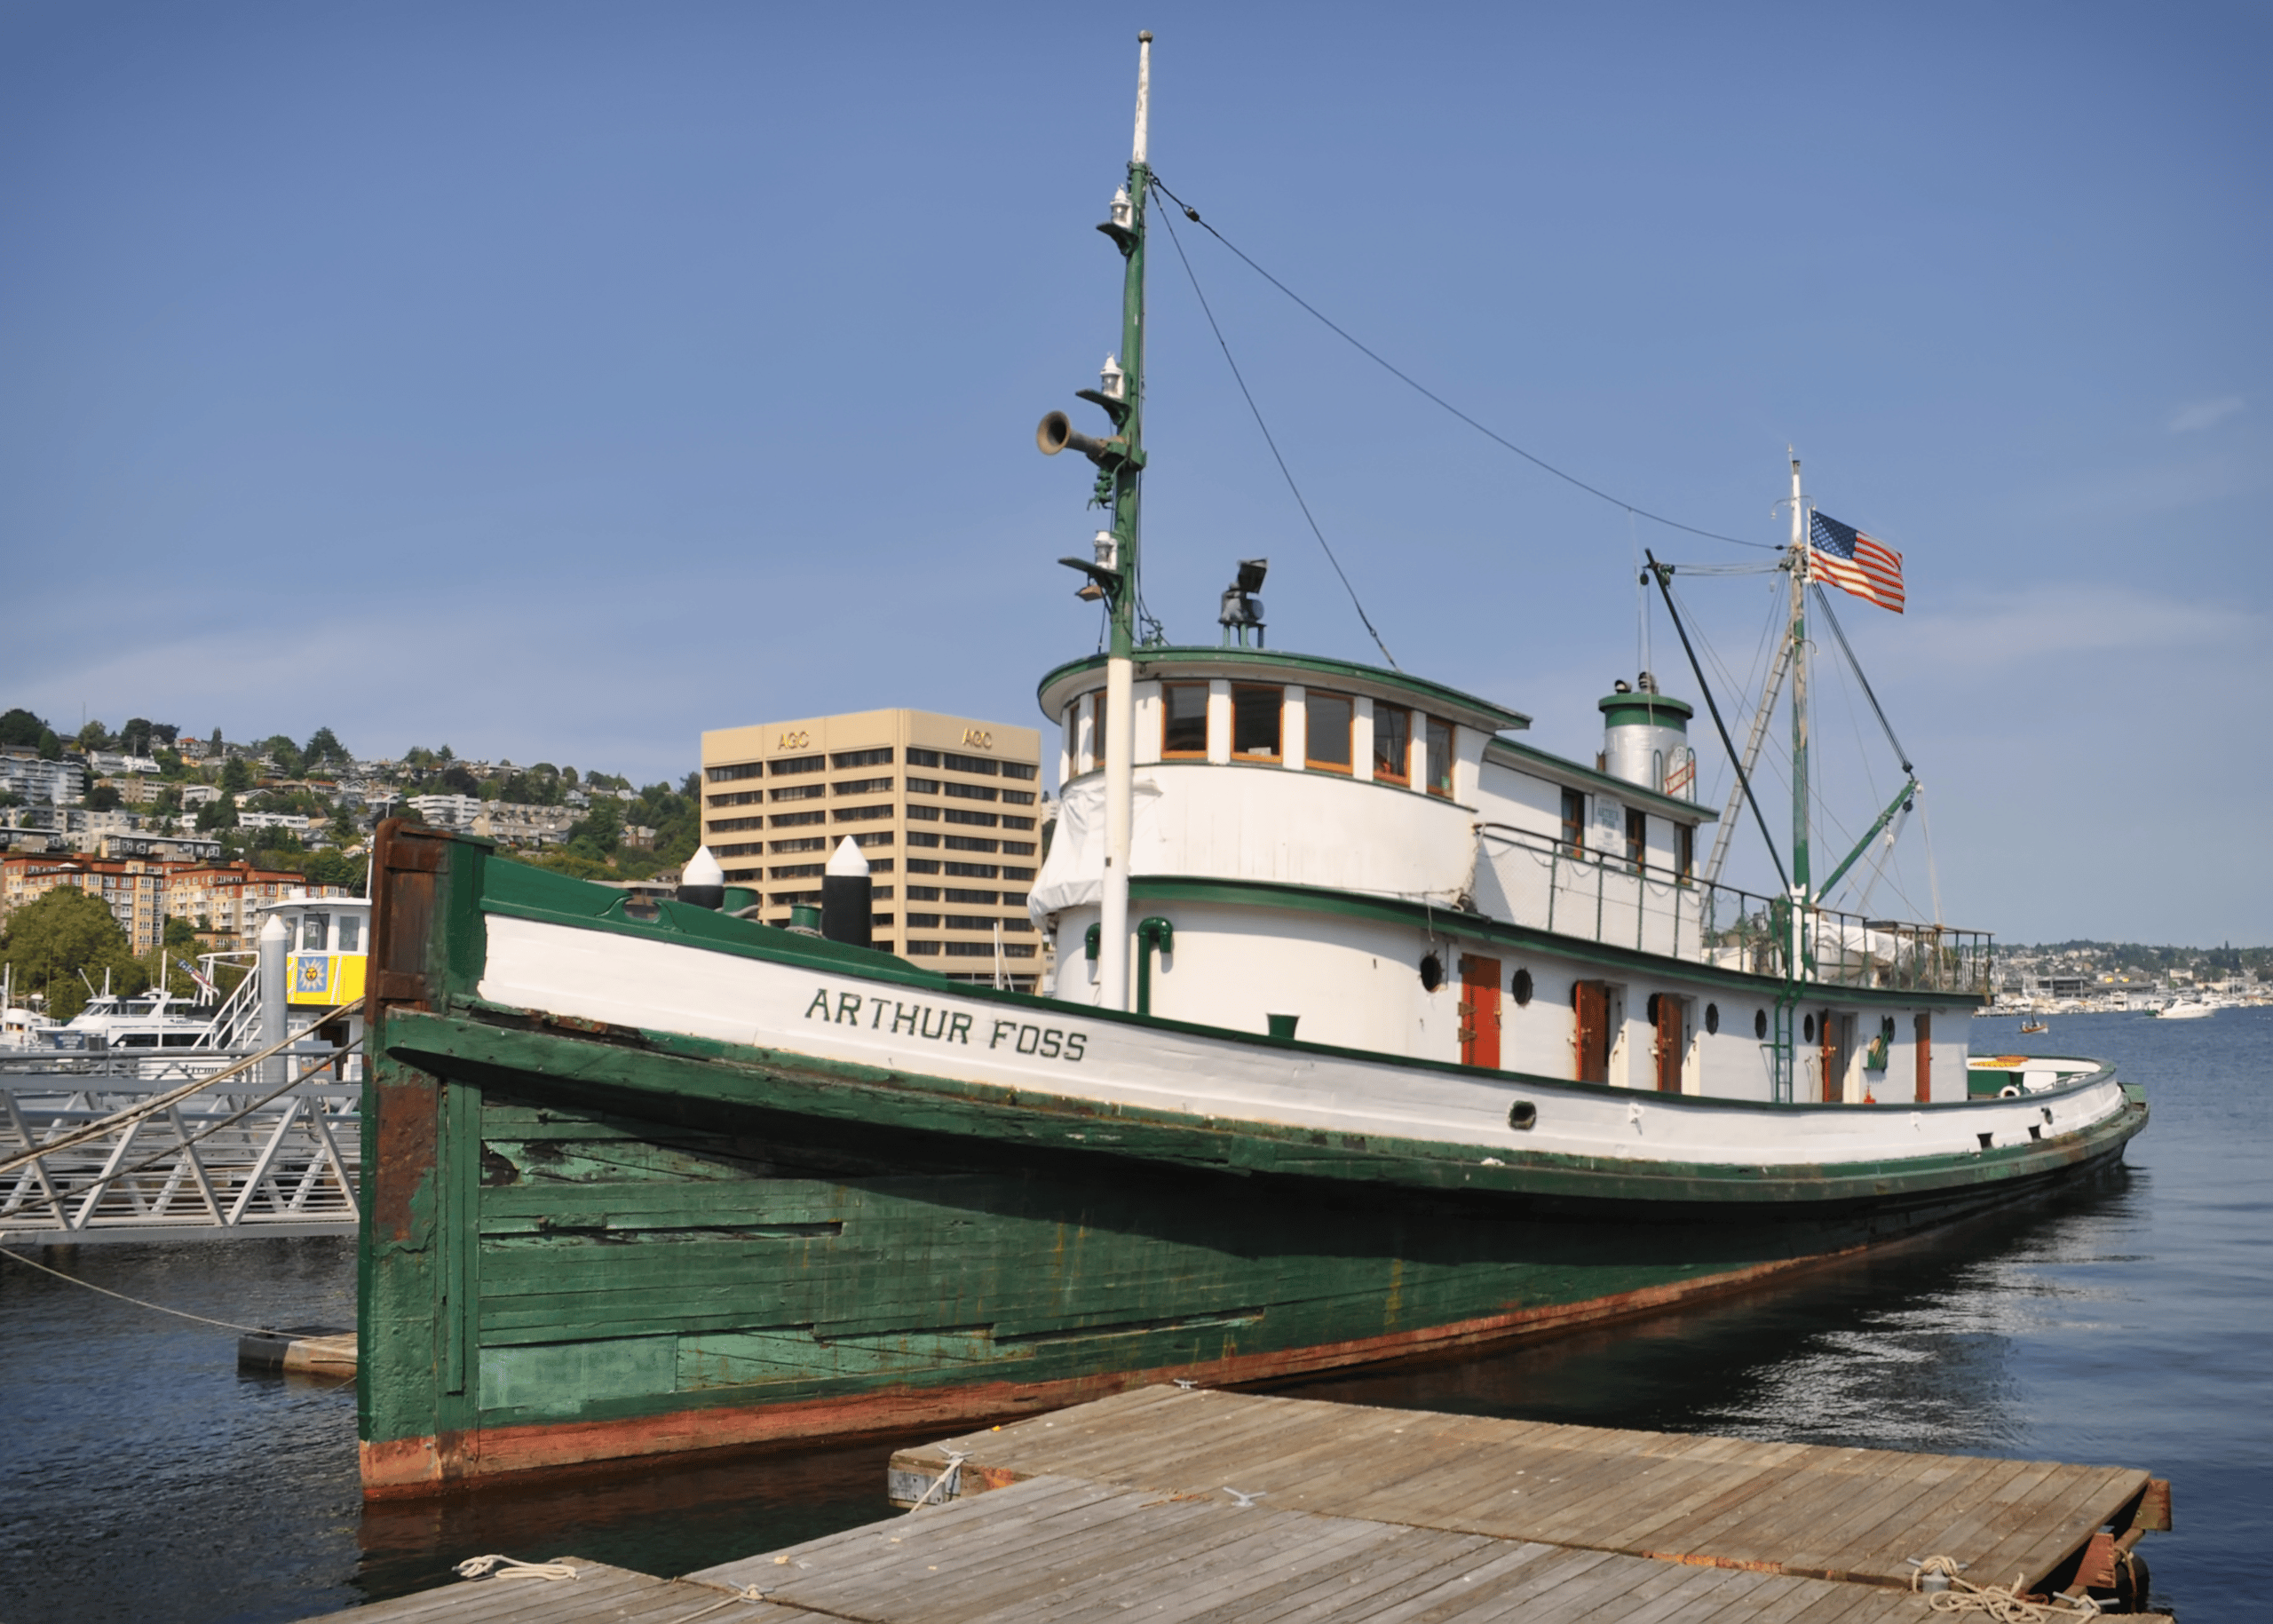 Arthur Foss Tugboat | Historic Sites In Washington